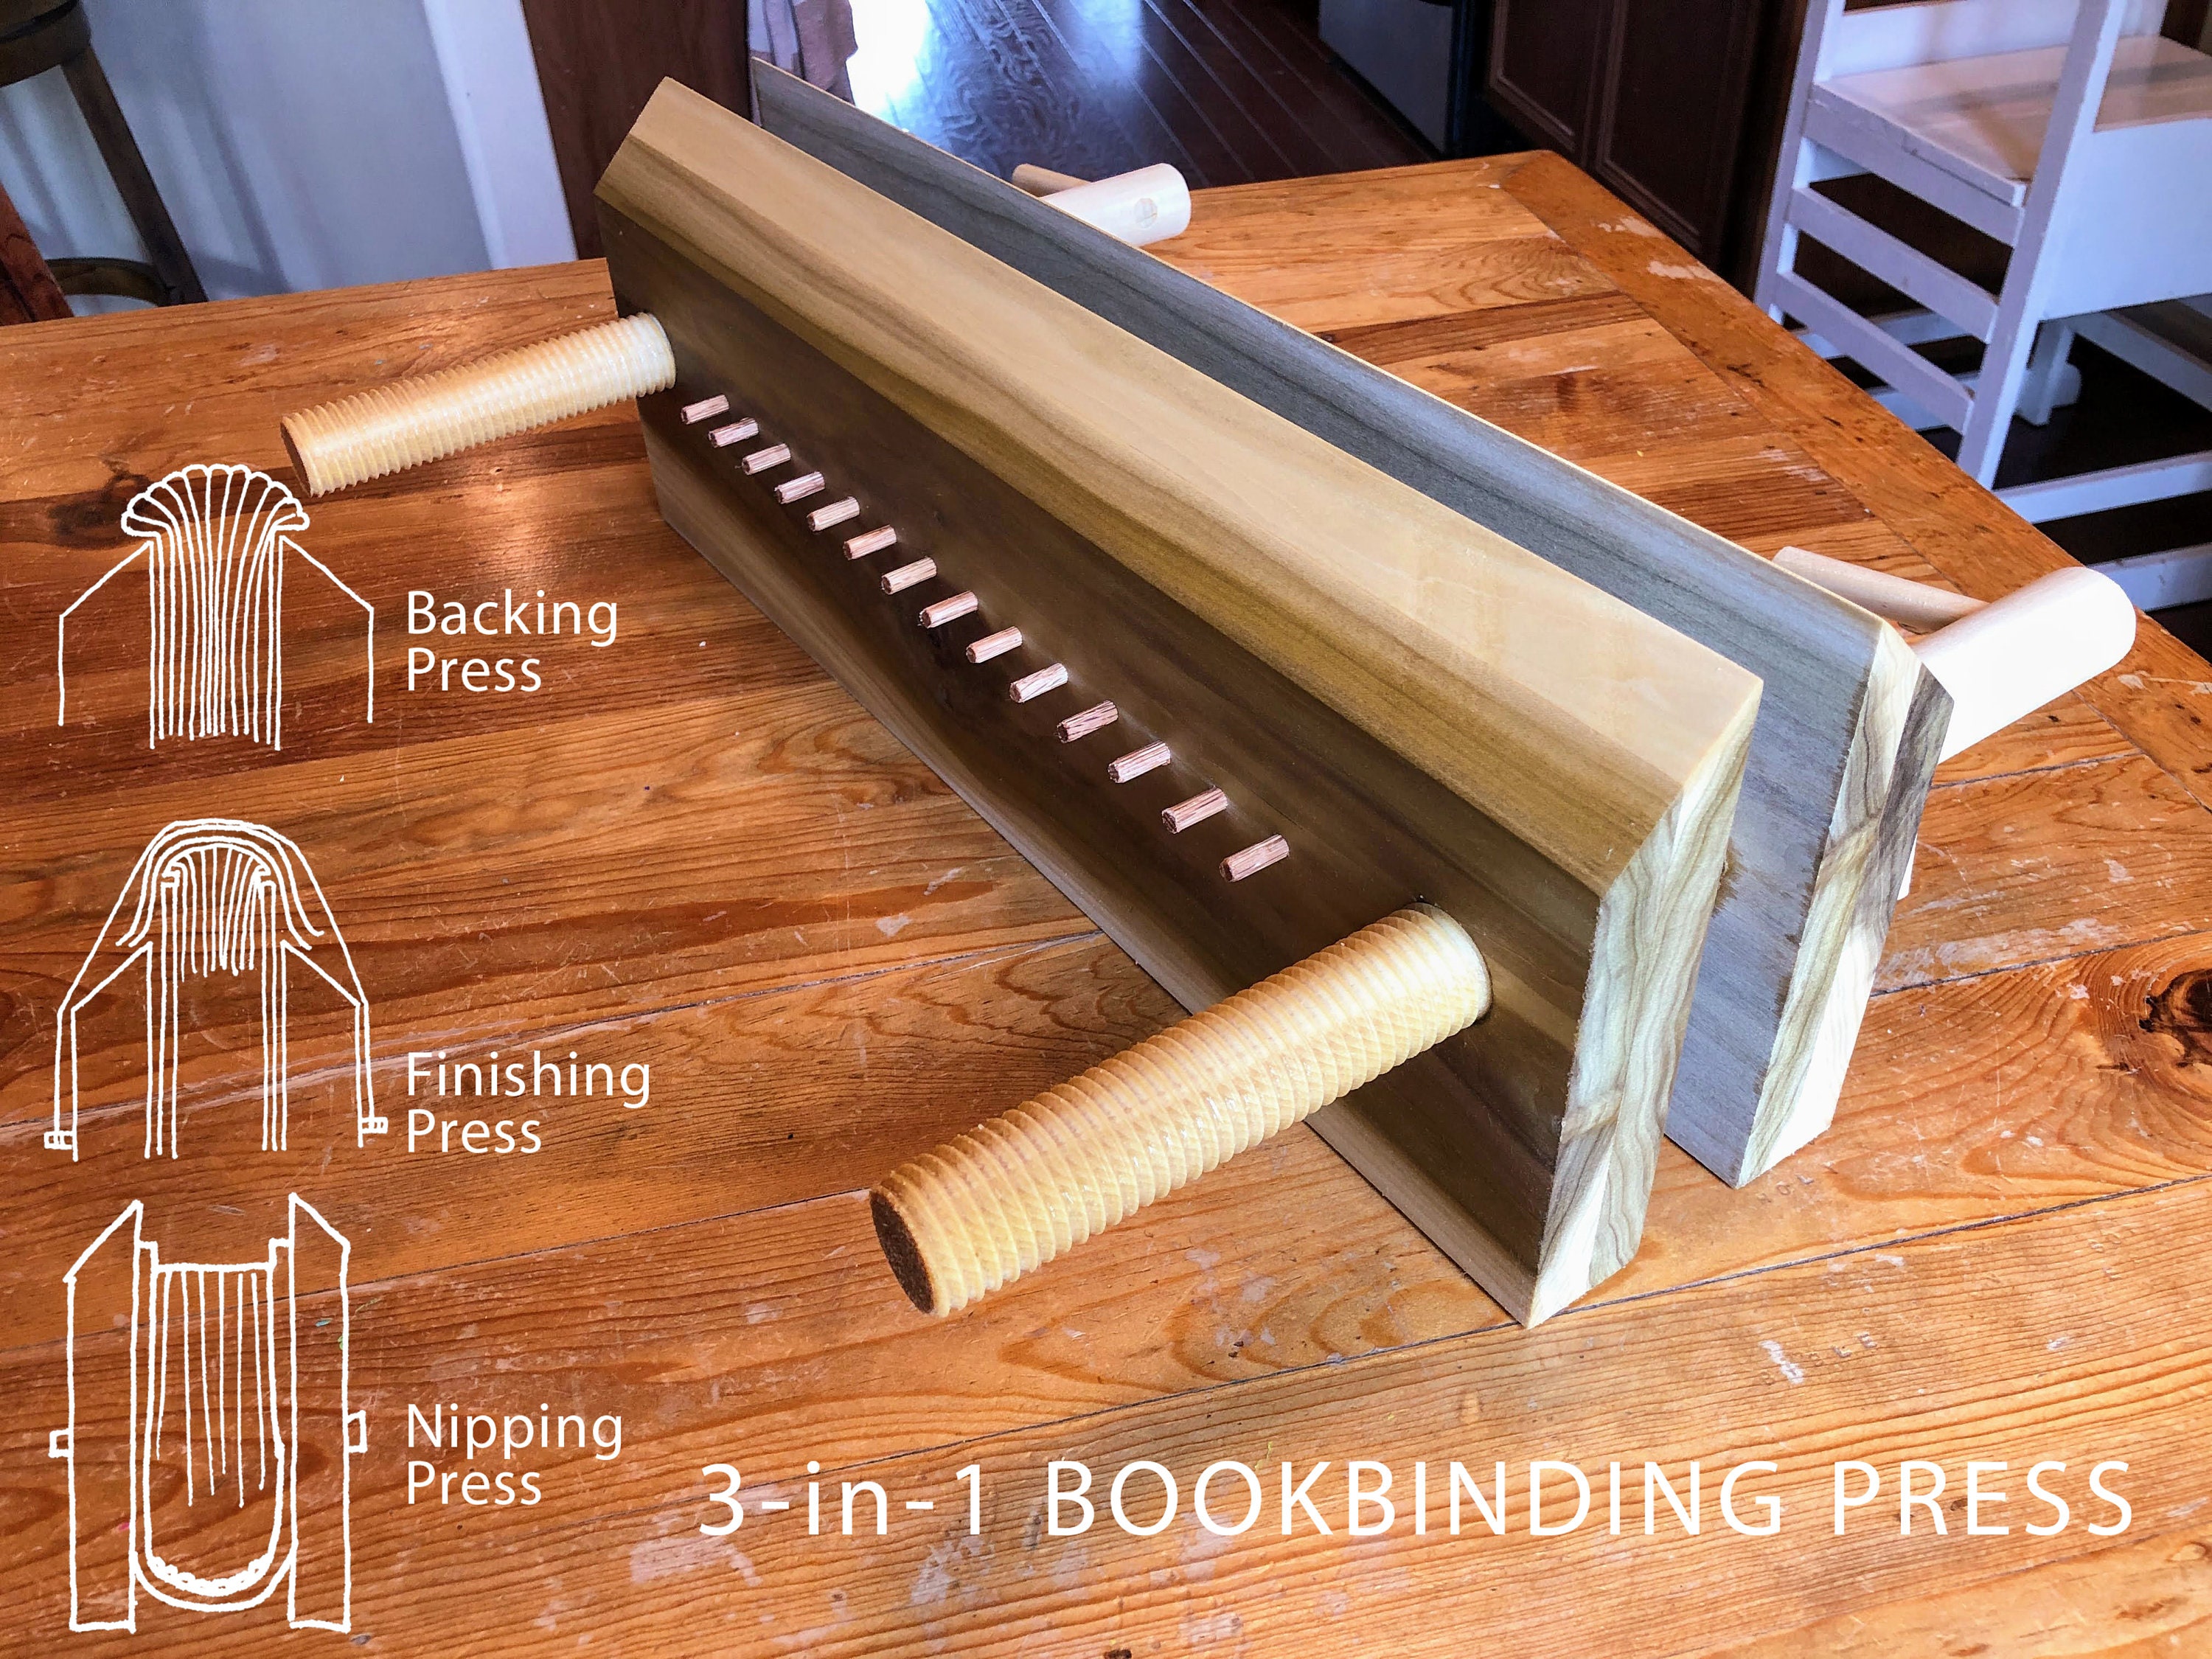 Bookbinding Press 3 in 1: Backing Press, Finishing Press, Nipping